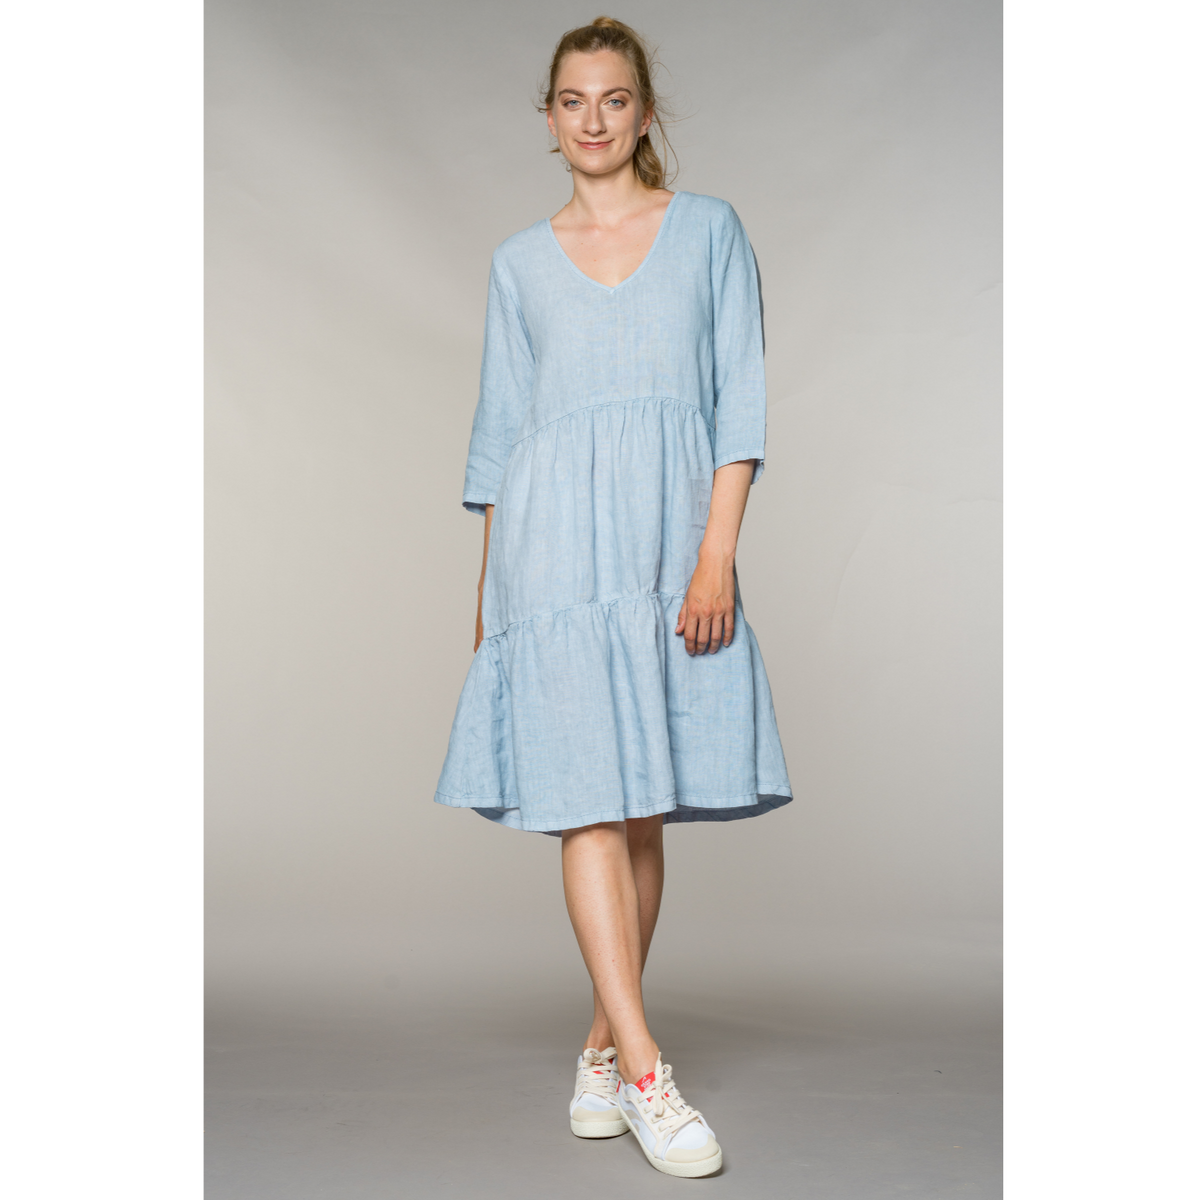 fv-Karo:lina | Midi Dress | Pure Linen I feuervogl